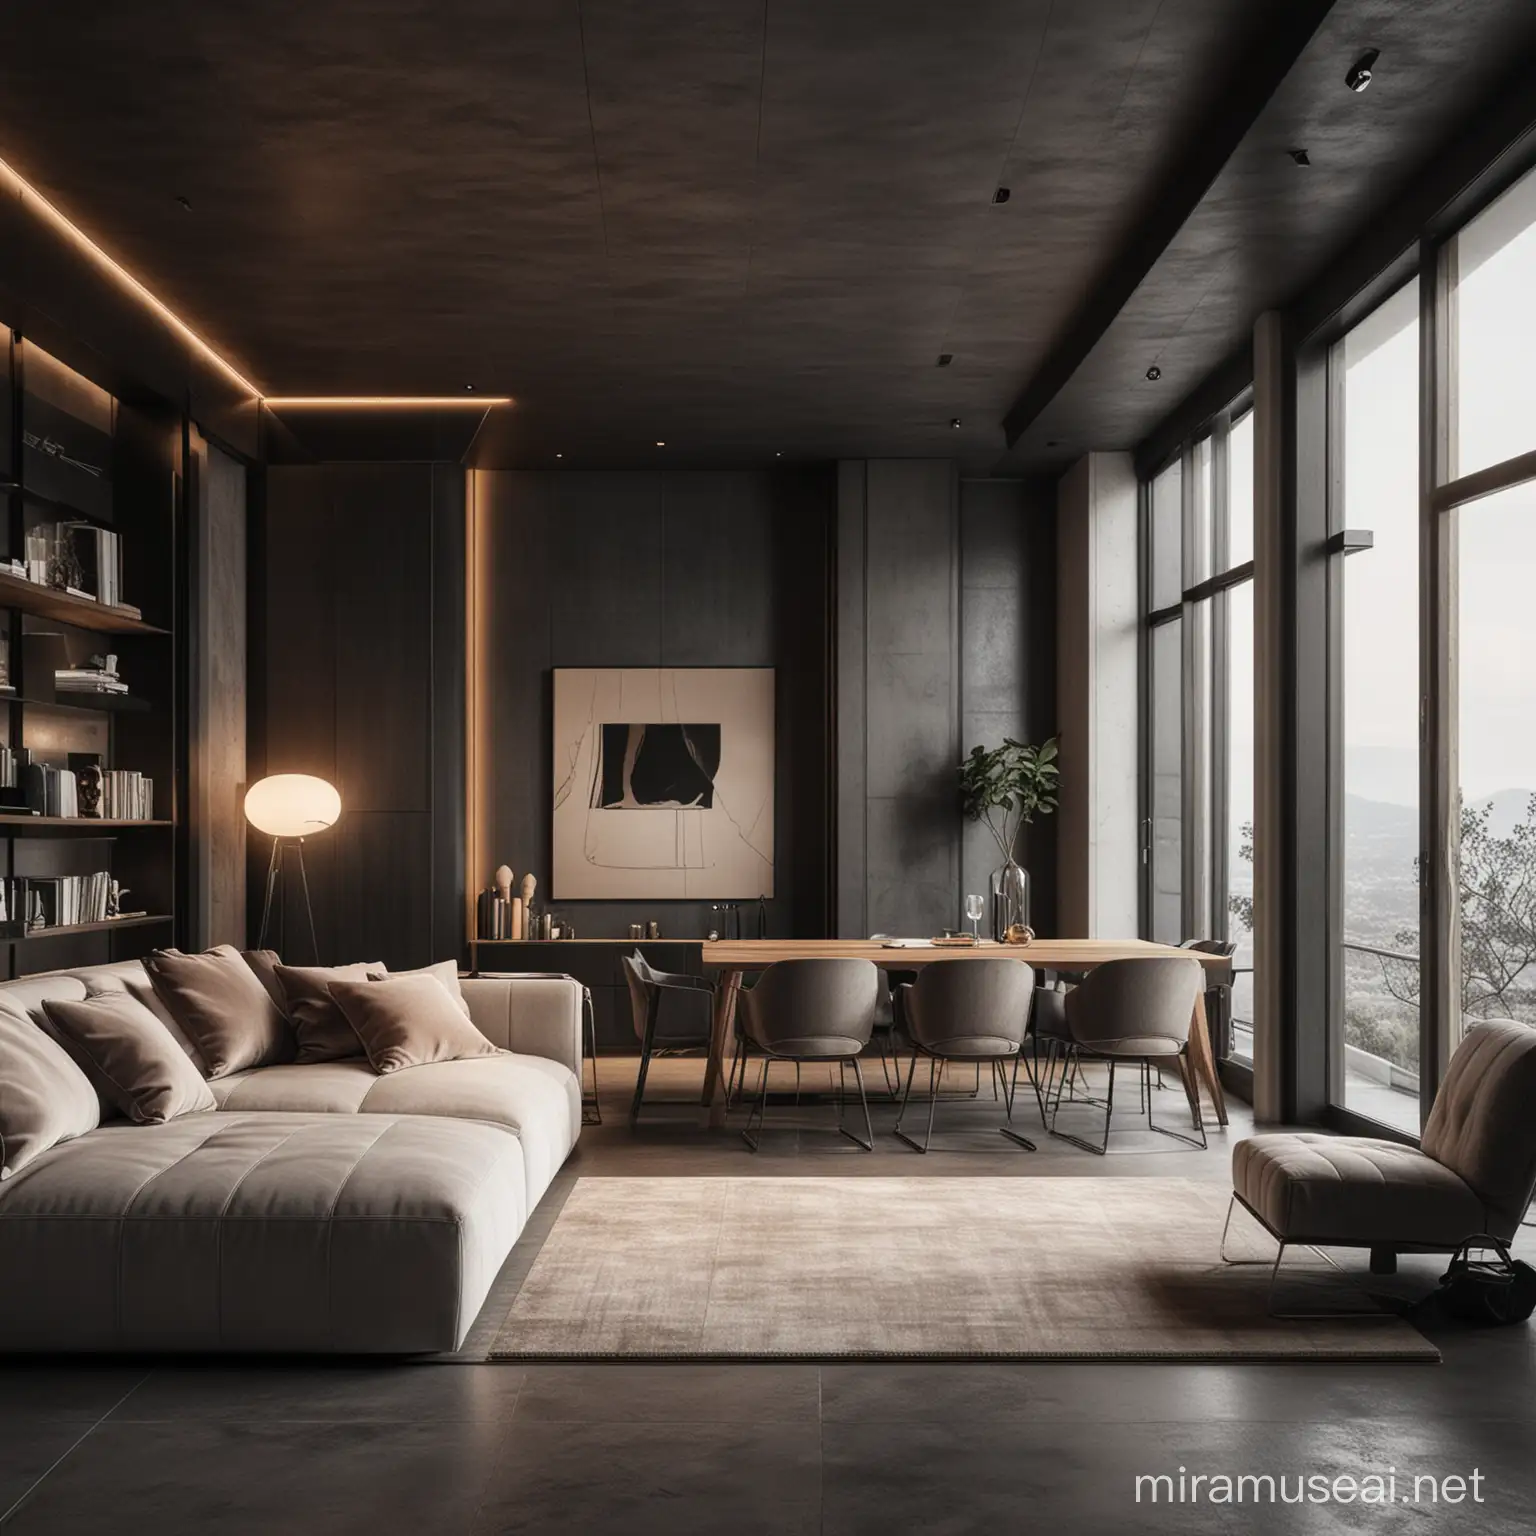 Futuristic Interior Design Geometric Architecture with Handmade Furniture